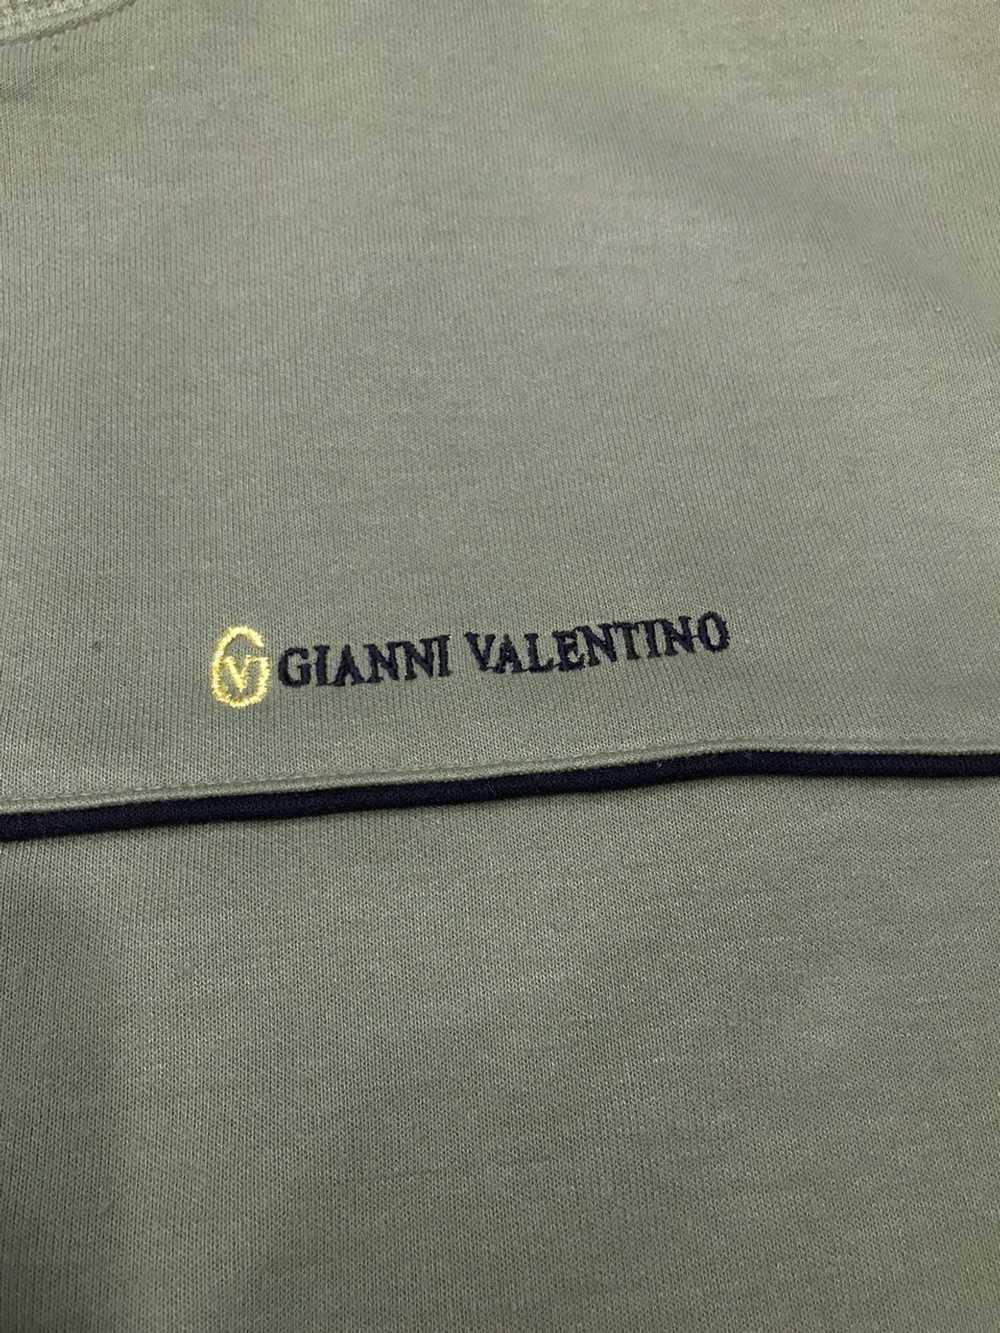 Gianni × Italian Designers × Valentino Vintage Gi… - image 4